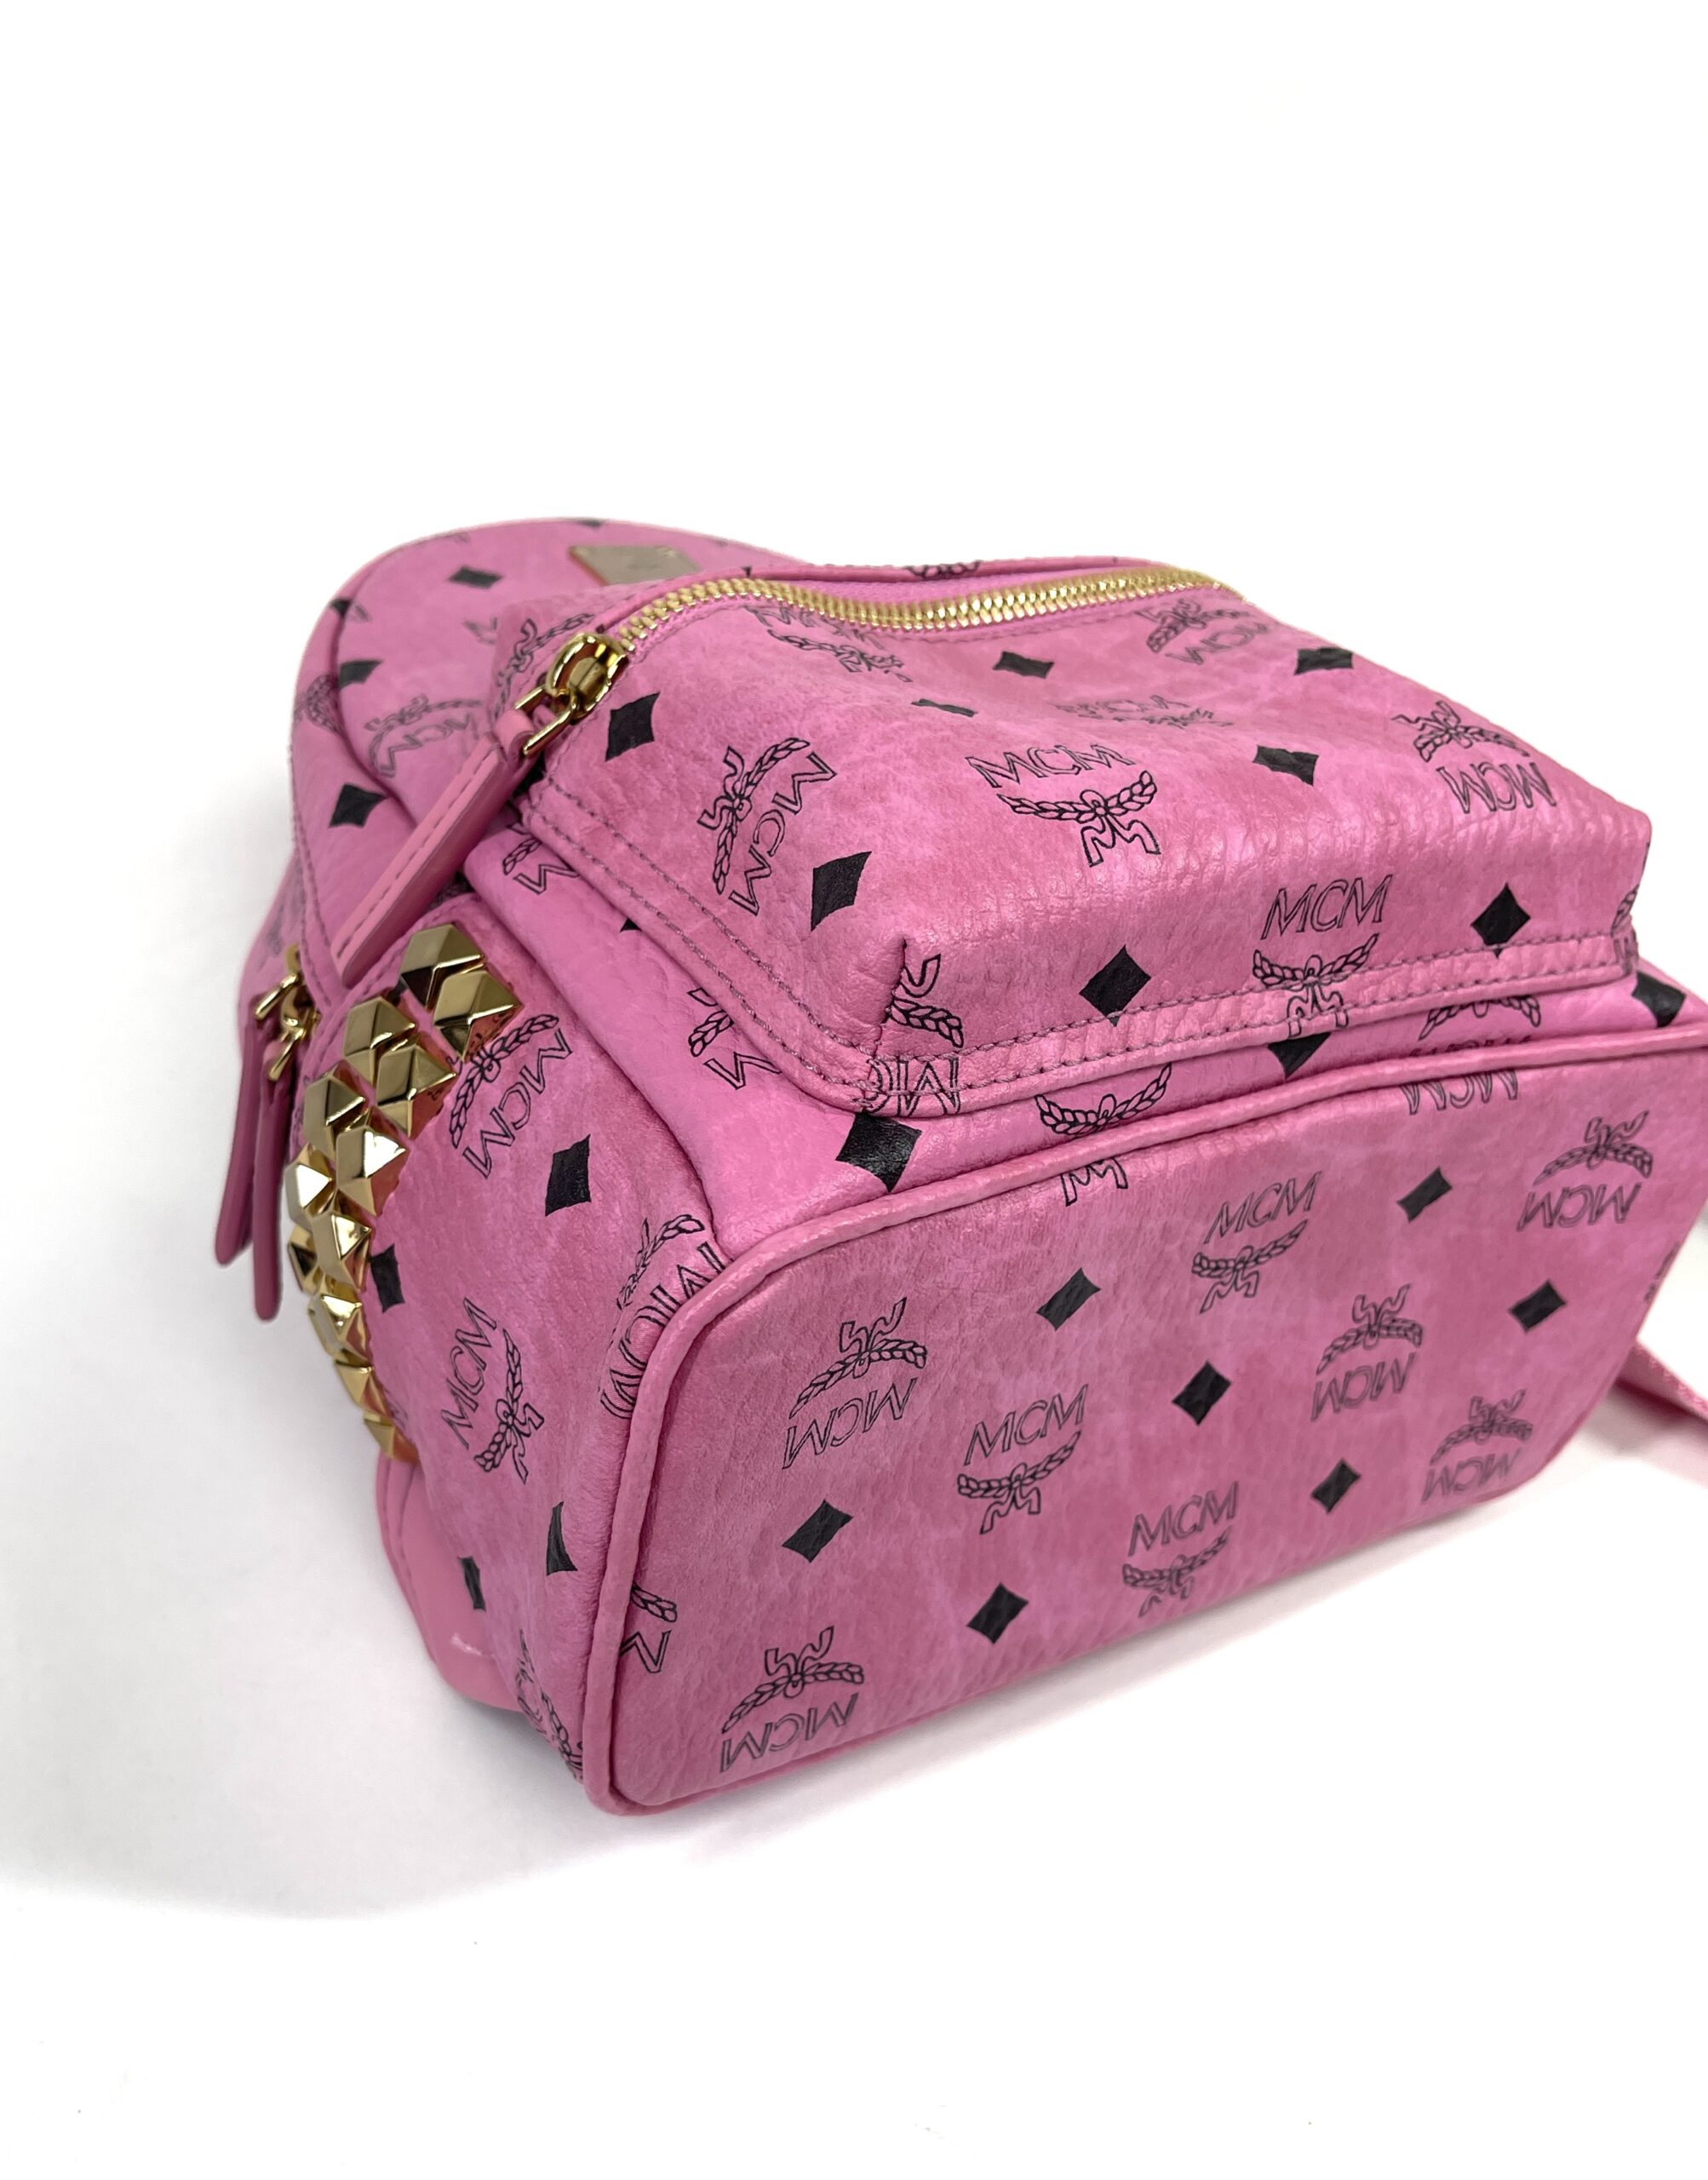 MCM Mini Side Studded Stark Backpack - Pink Backpacks, Handbags - W3049526